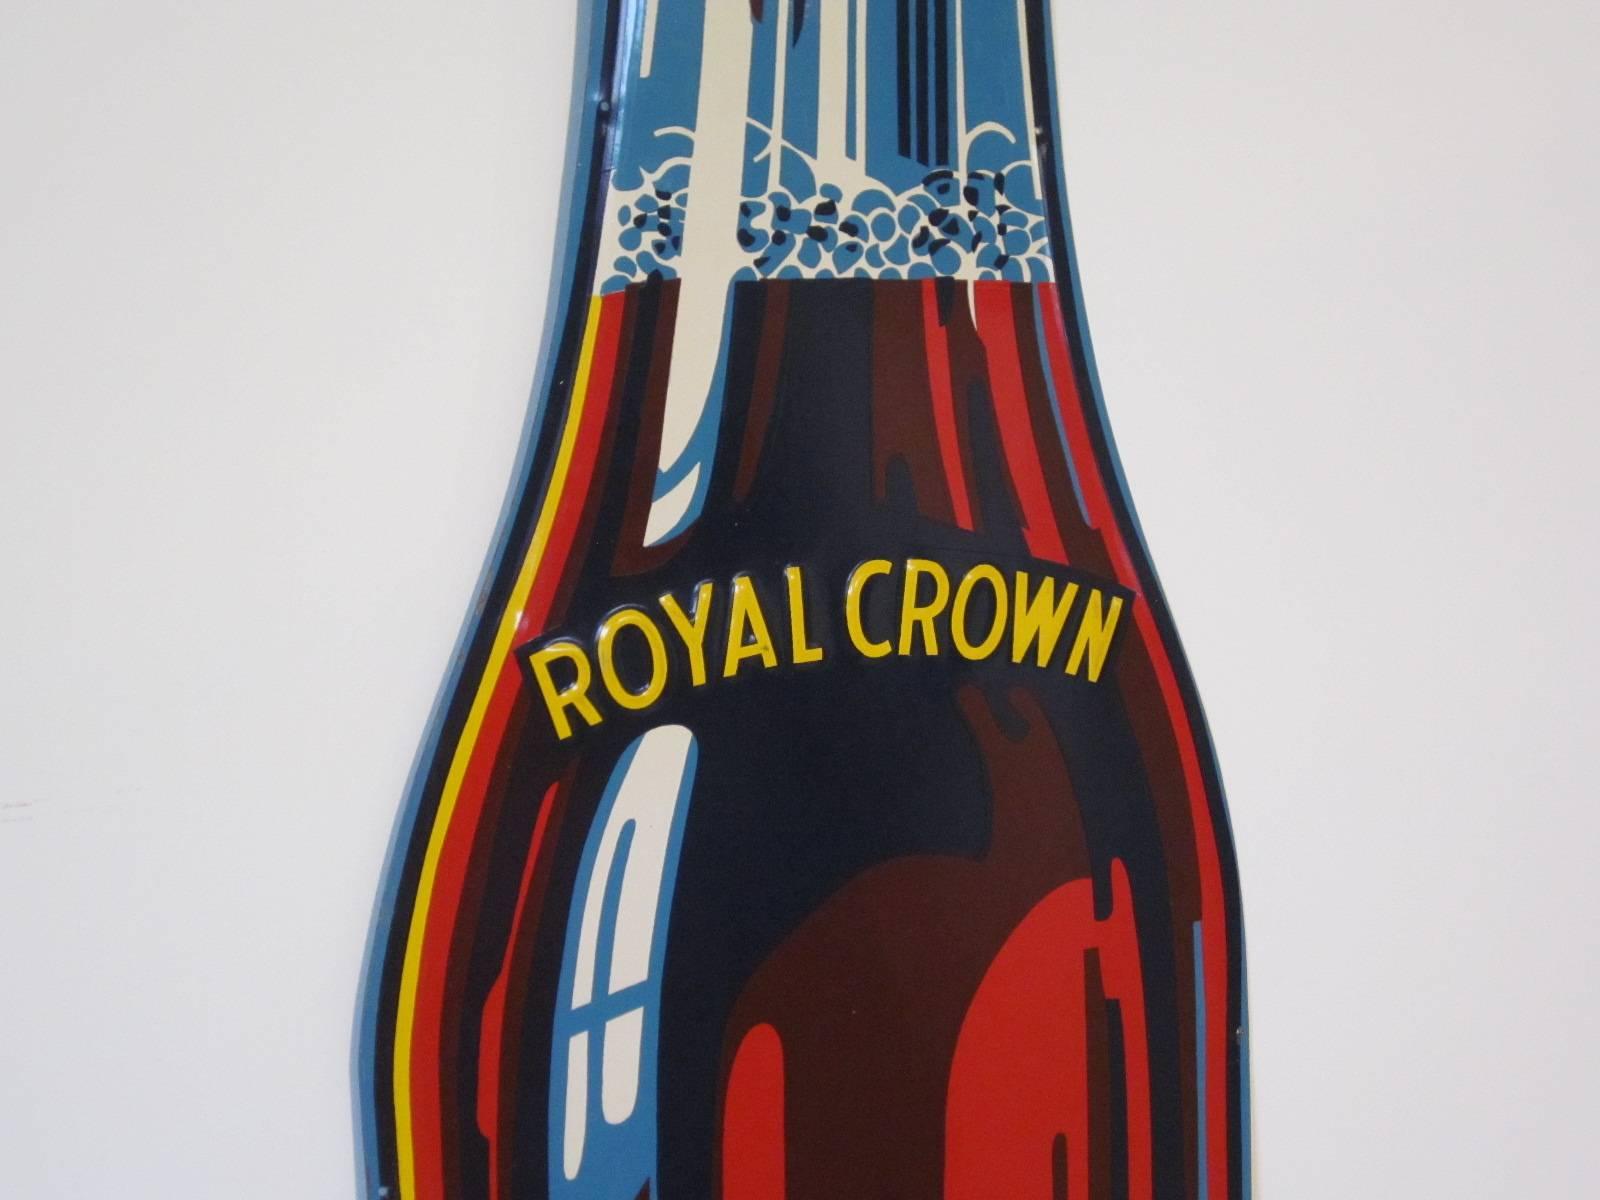 royal crown cola sign value